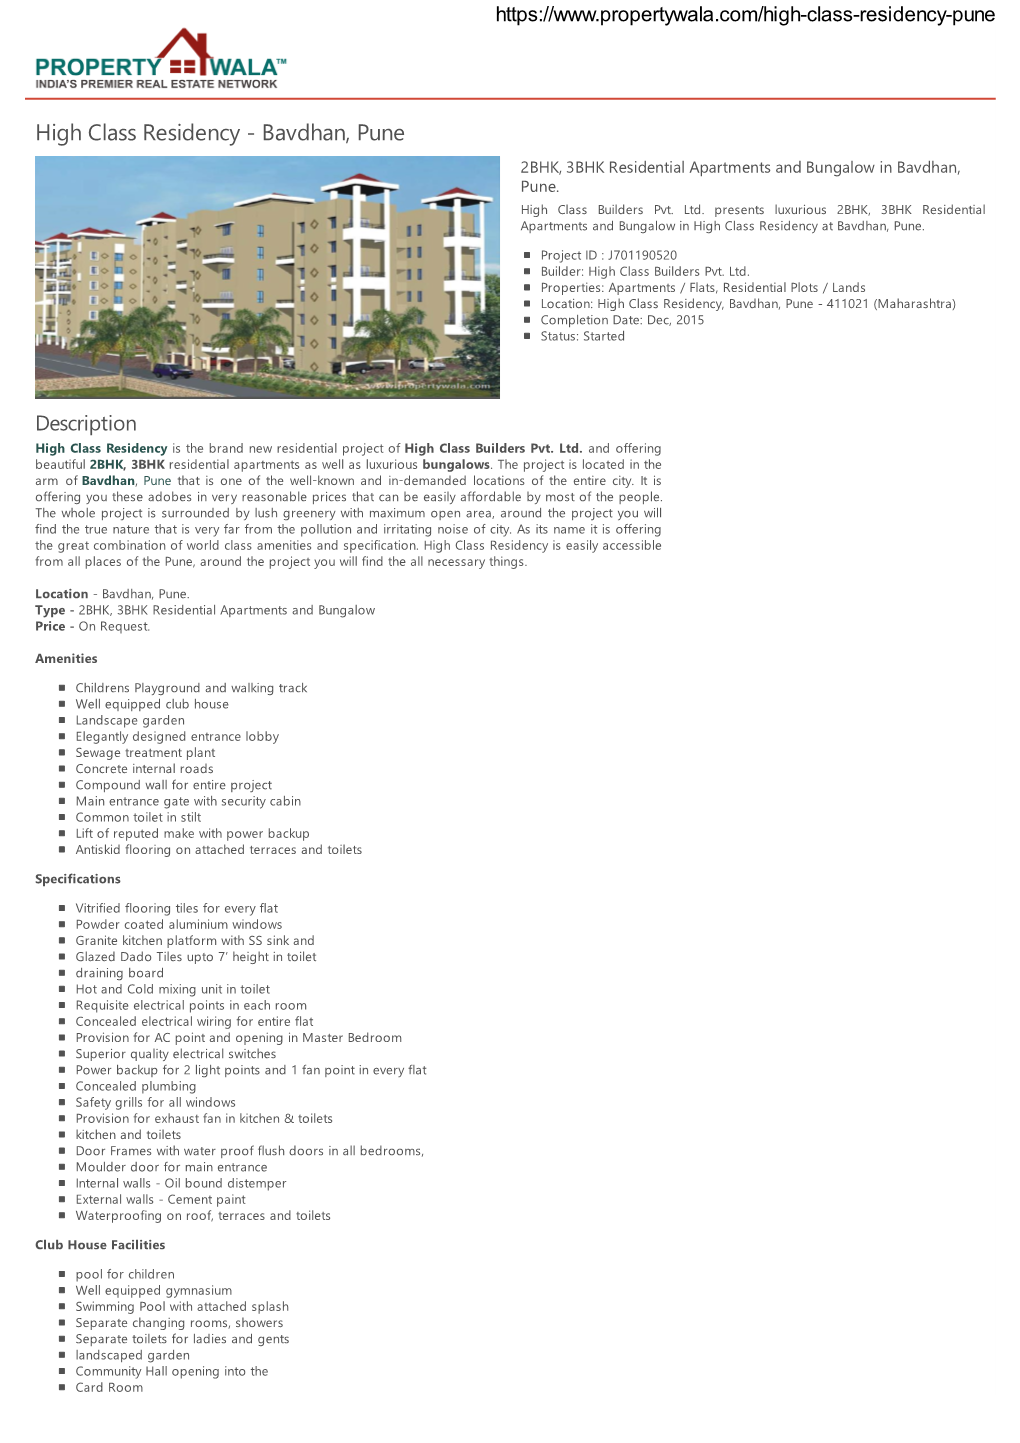 High Class Residency - Bavdhan, Pune 2BHK, 3BHK Residential Apartments and Bungalow in Bavdhan, Pune